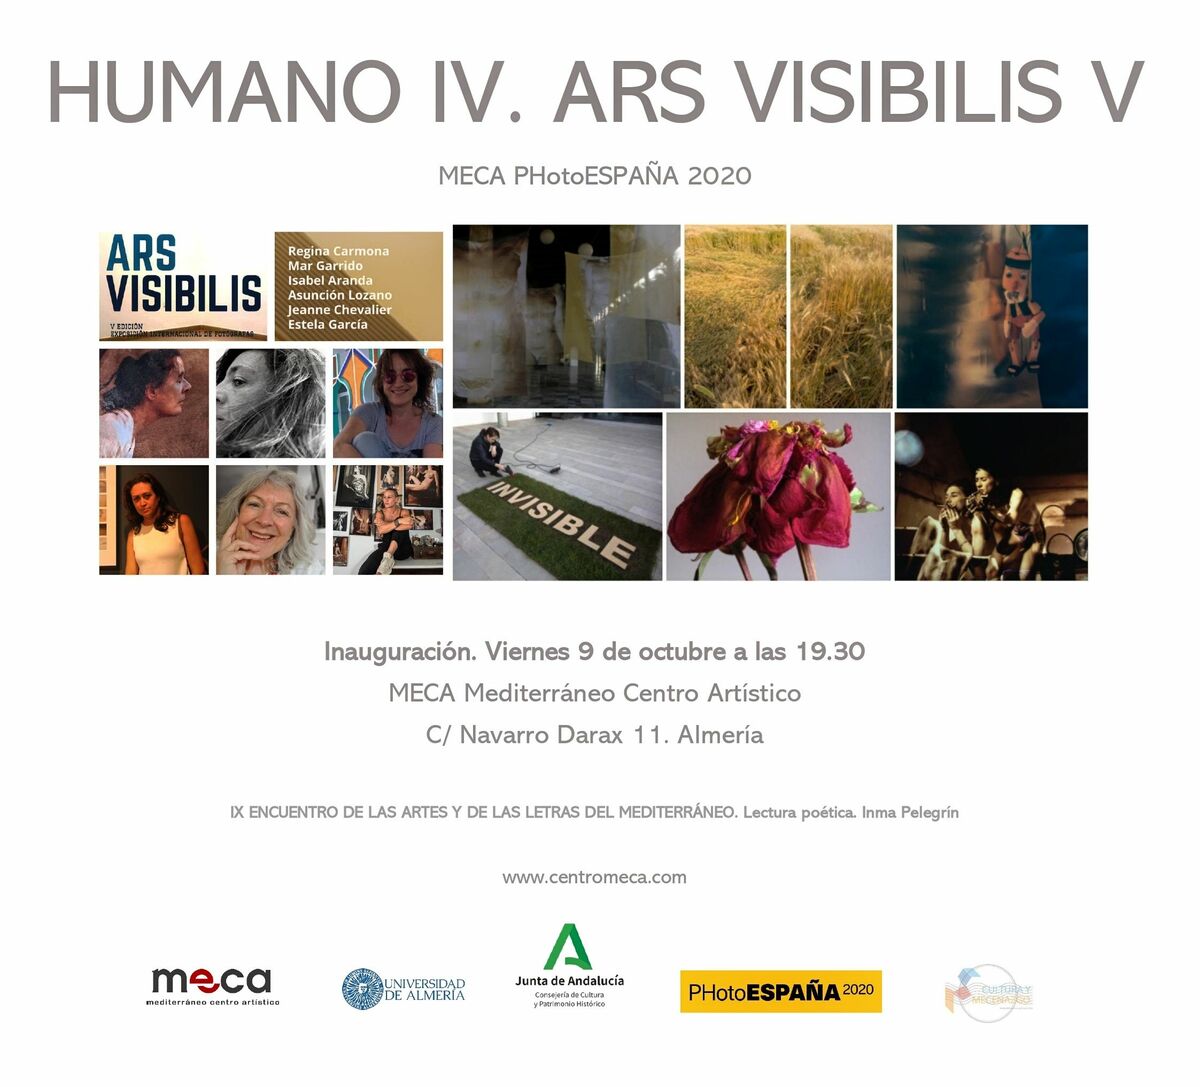 Invitacion Humano IV. ARS VISIBILIS V